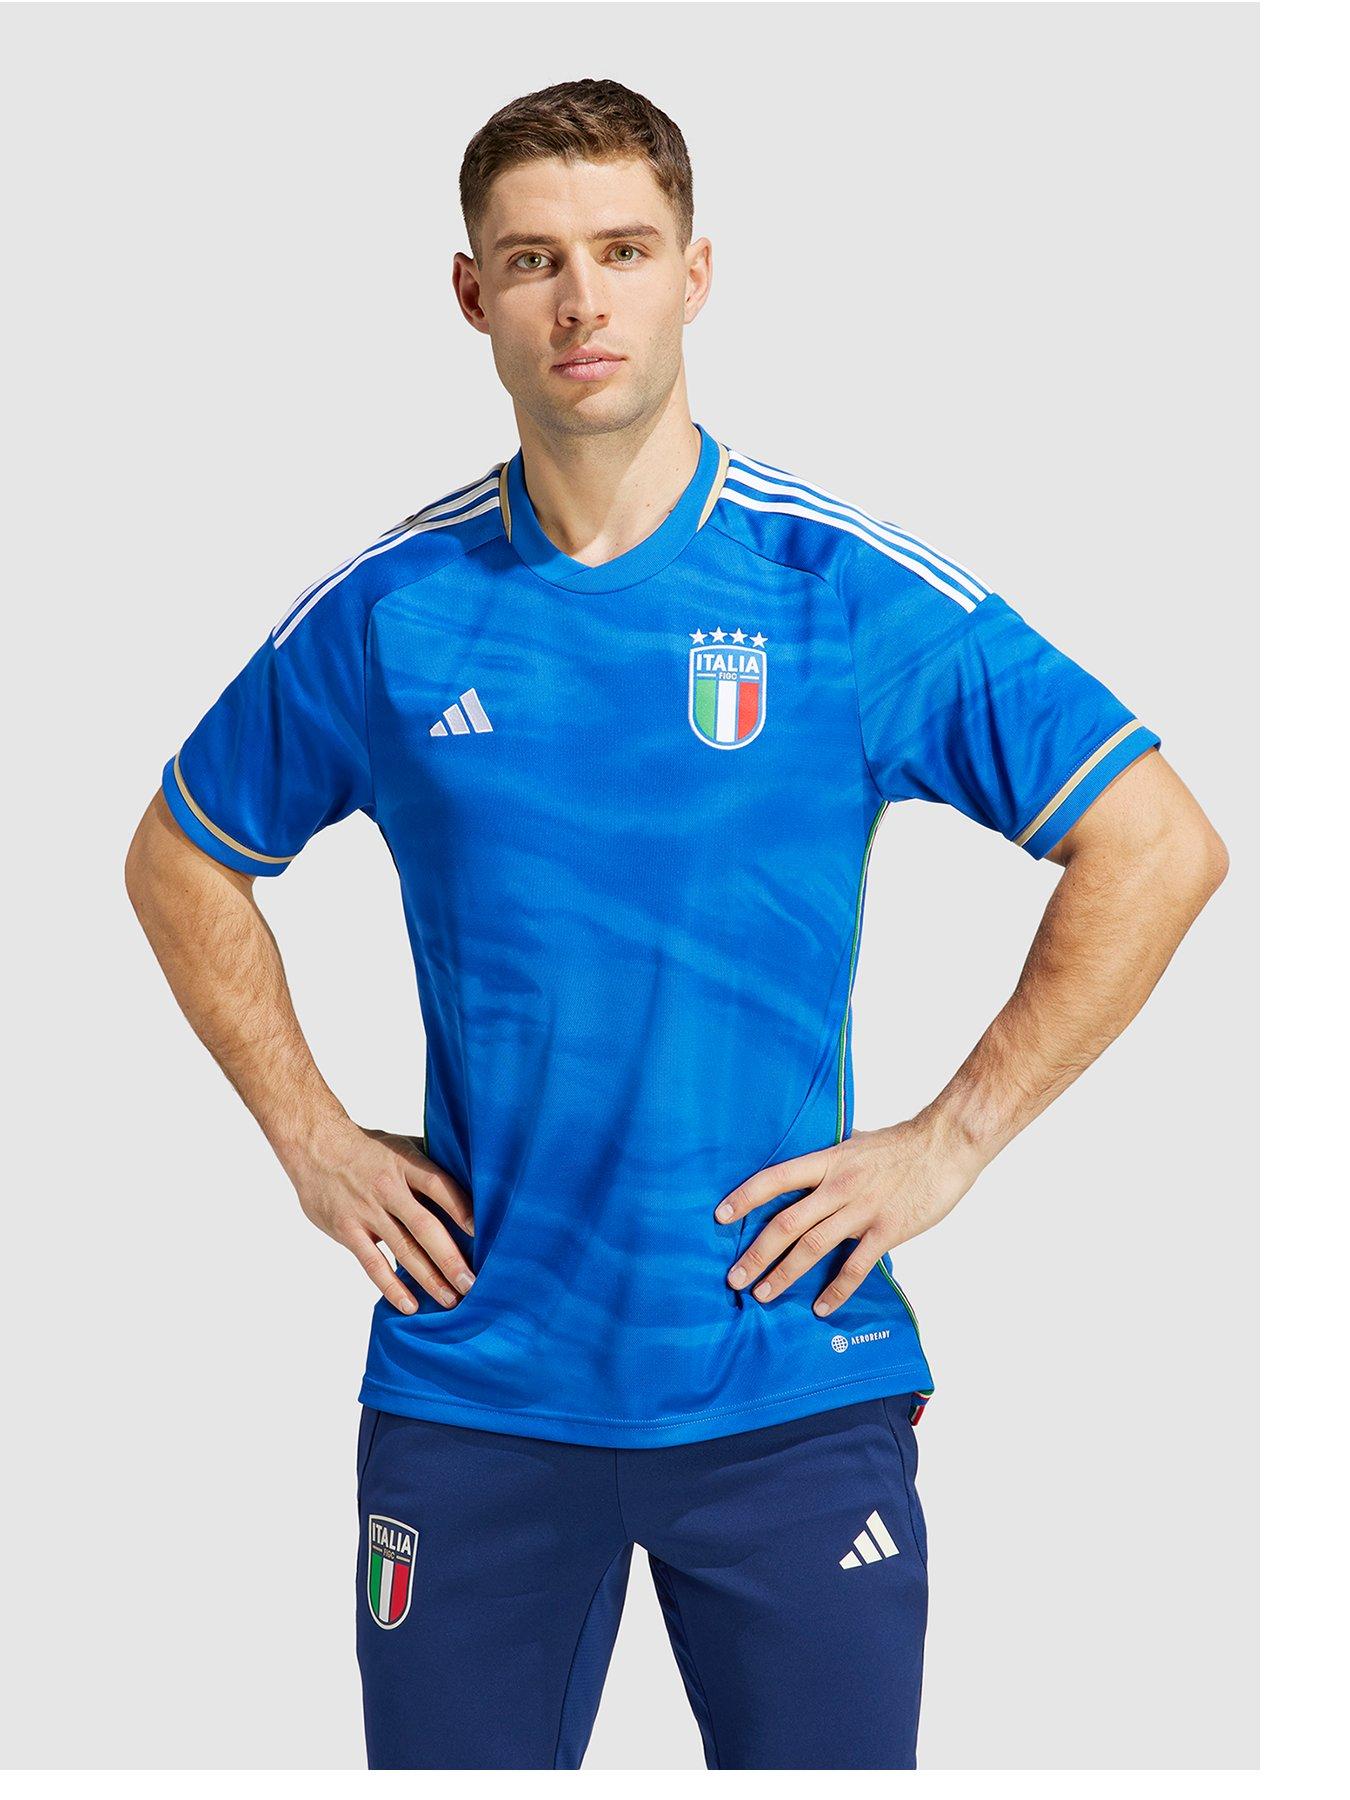 Outlook Lee Grondig Italy | XXL | Adidas | Football shirts & kits | Mens sports clothing |  Sports & leisure | Very Ireland